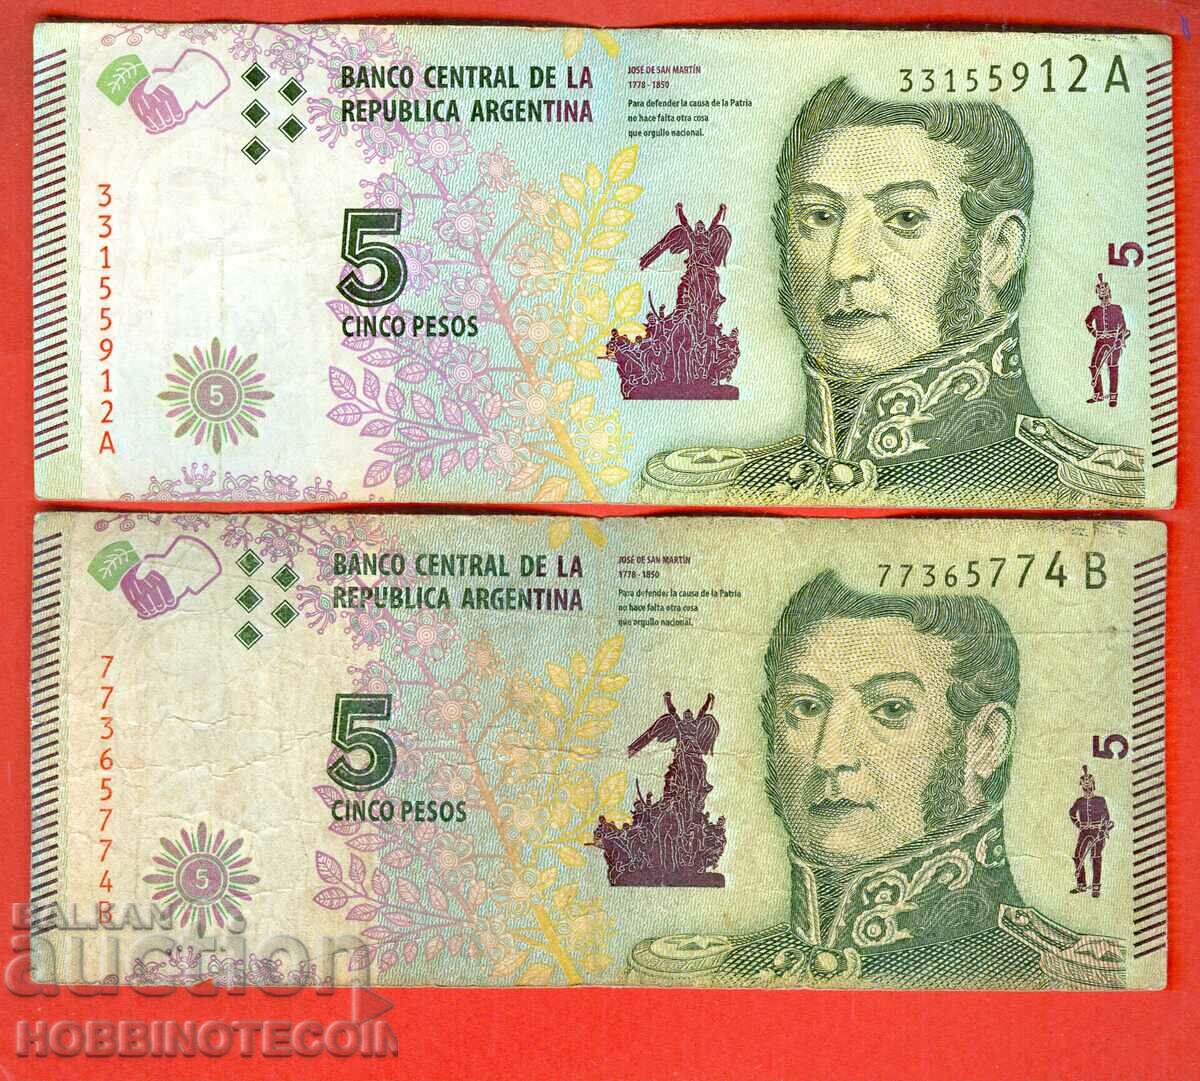 ARGENTINA ARGENTINA 2 x 5 Pesos issue 2015 series A - B